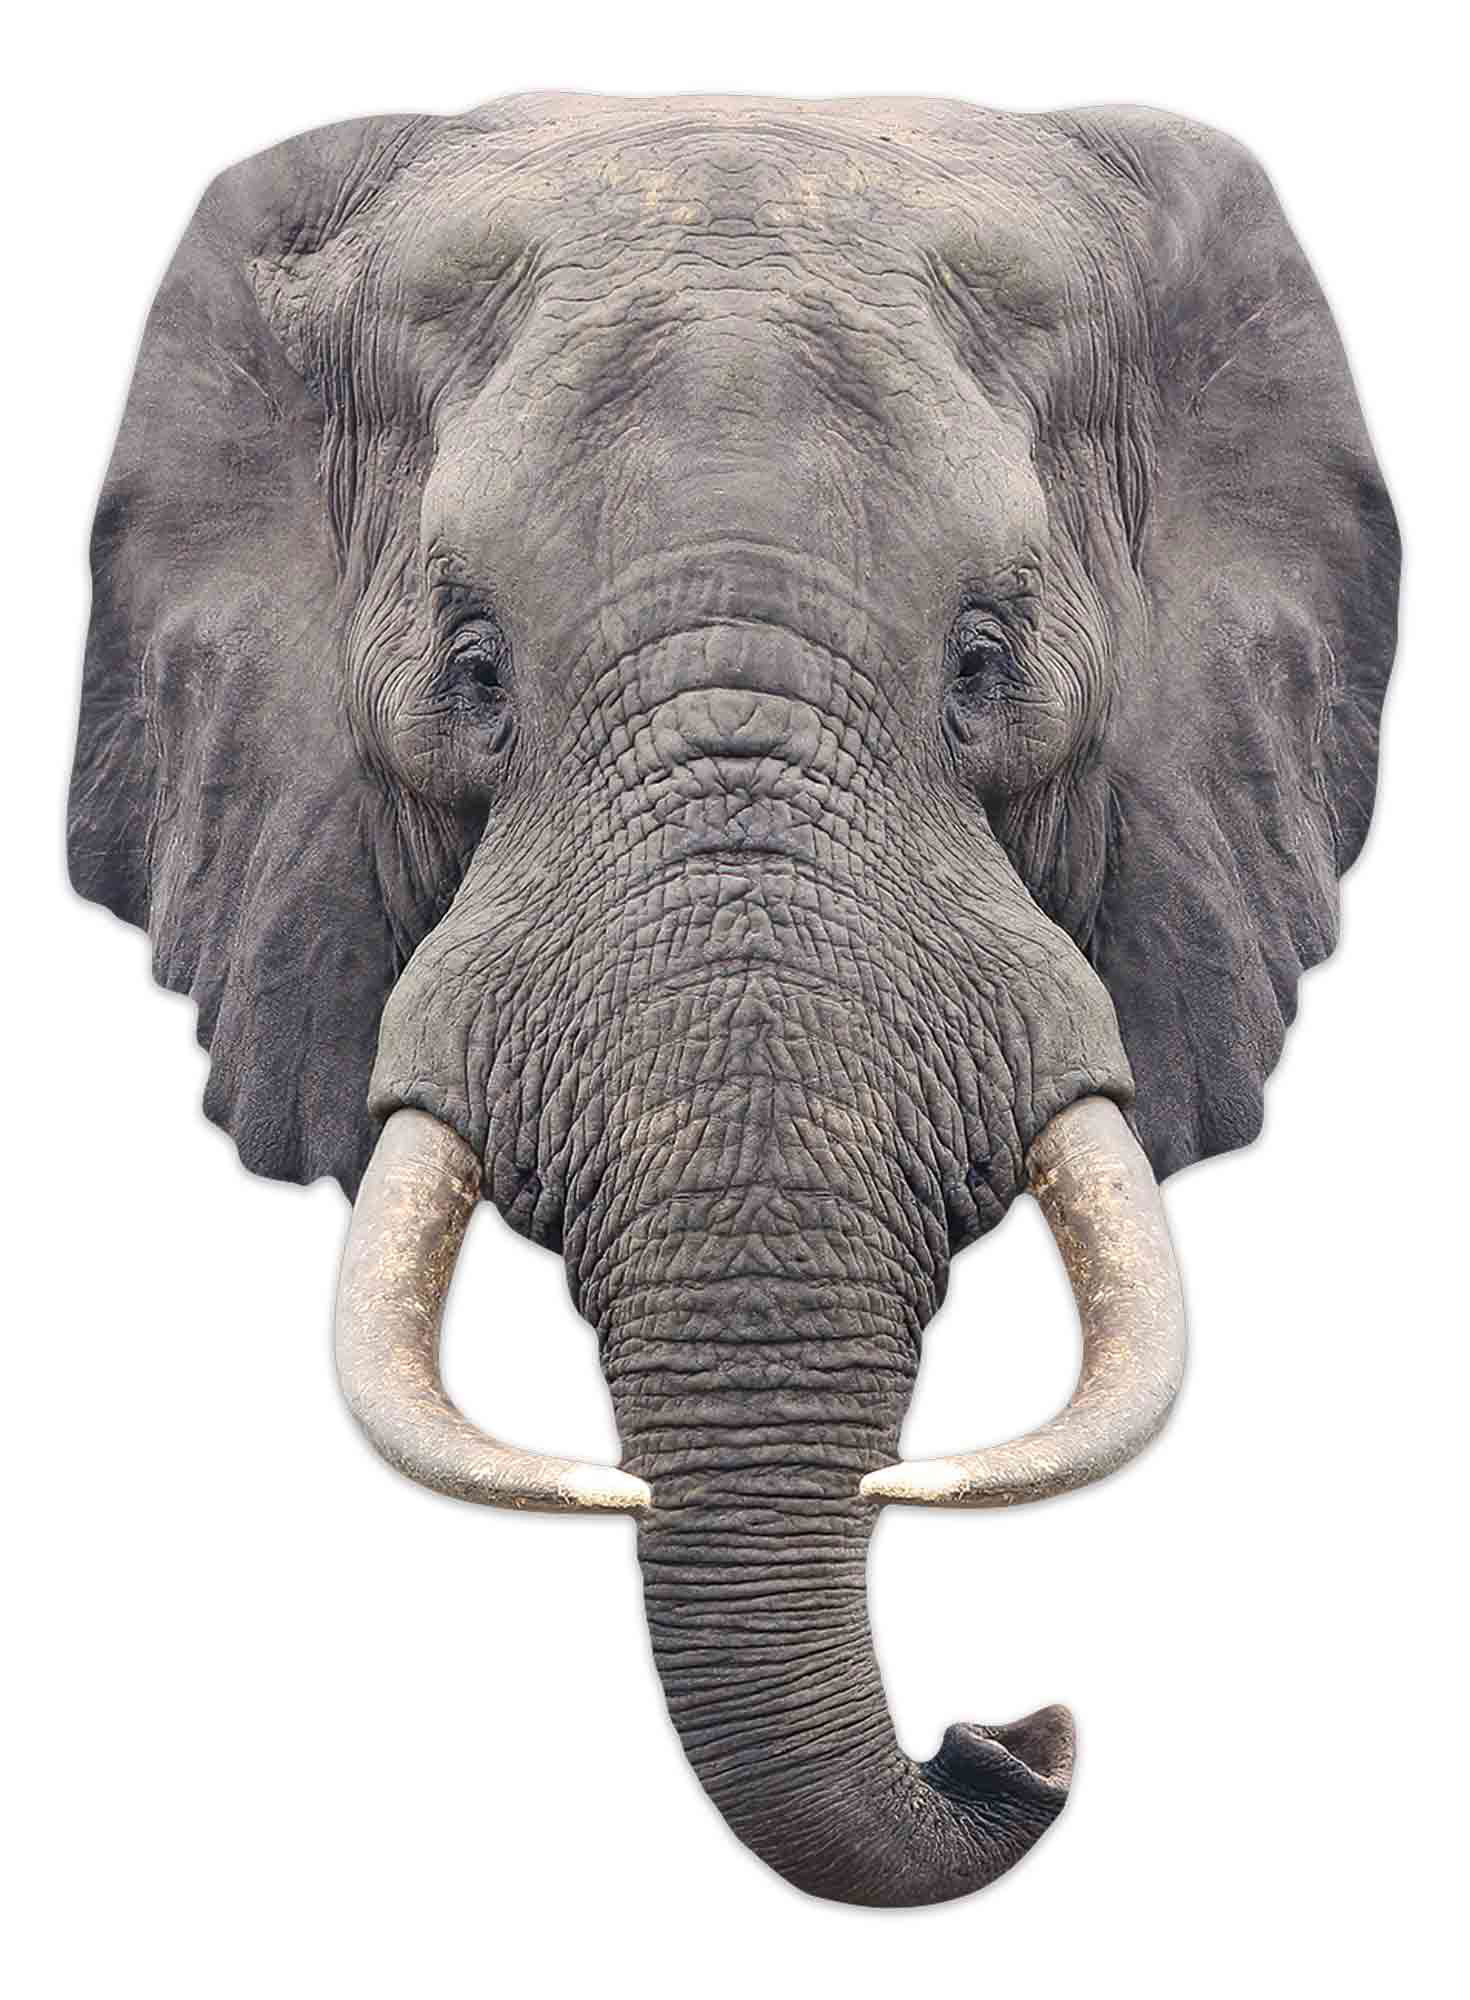 Elephant Maske - Tier